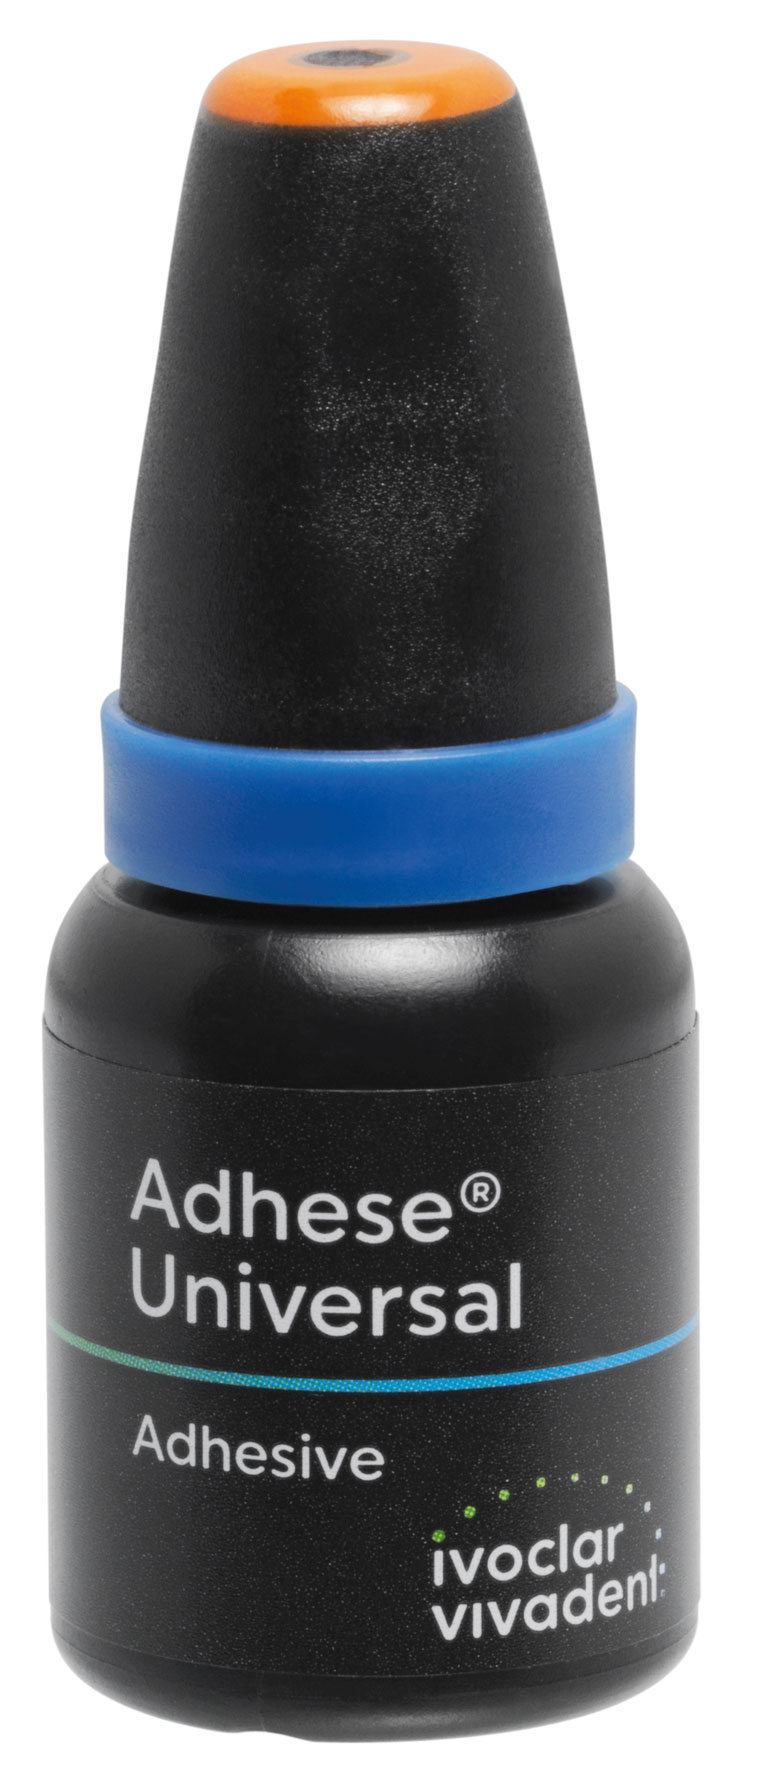 Adhese® Universal Flacons d Adhese Universal Ivoclar 160040